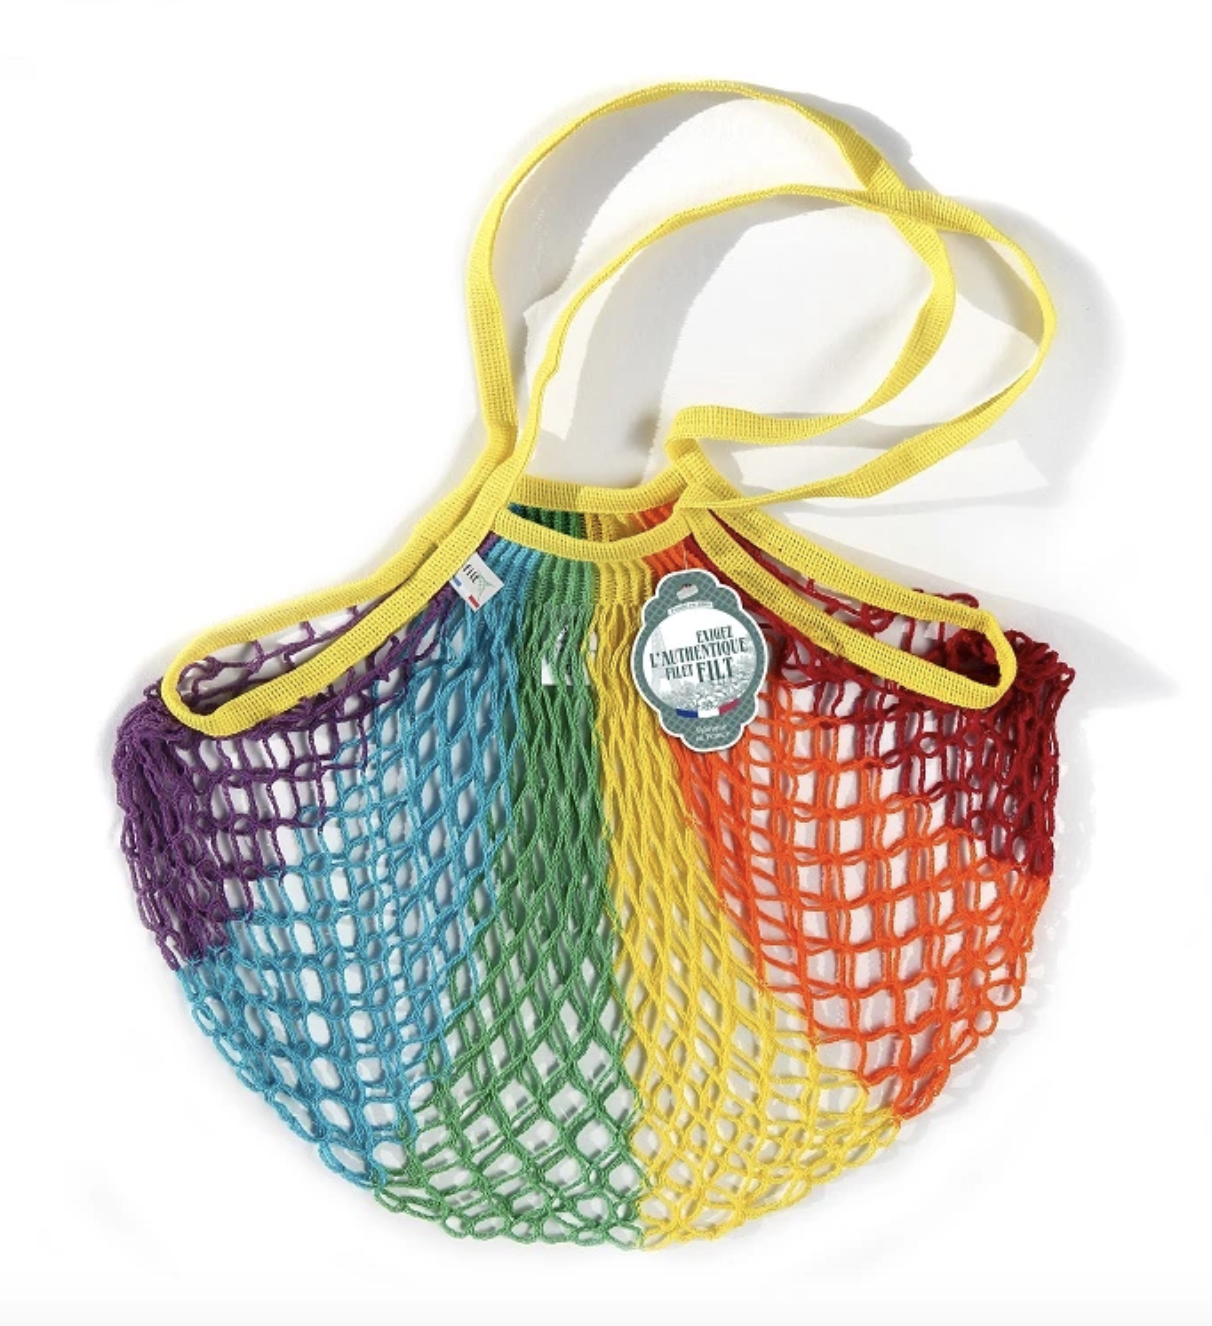 The rainbow net tote bag